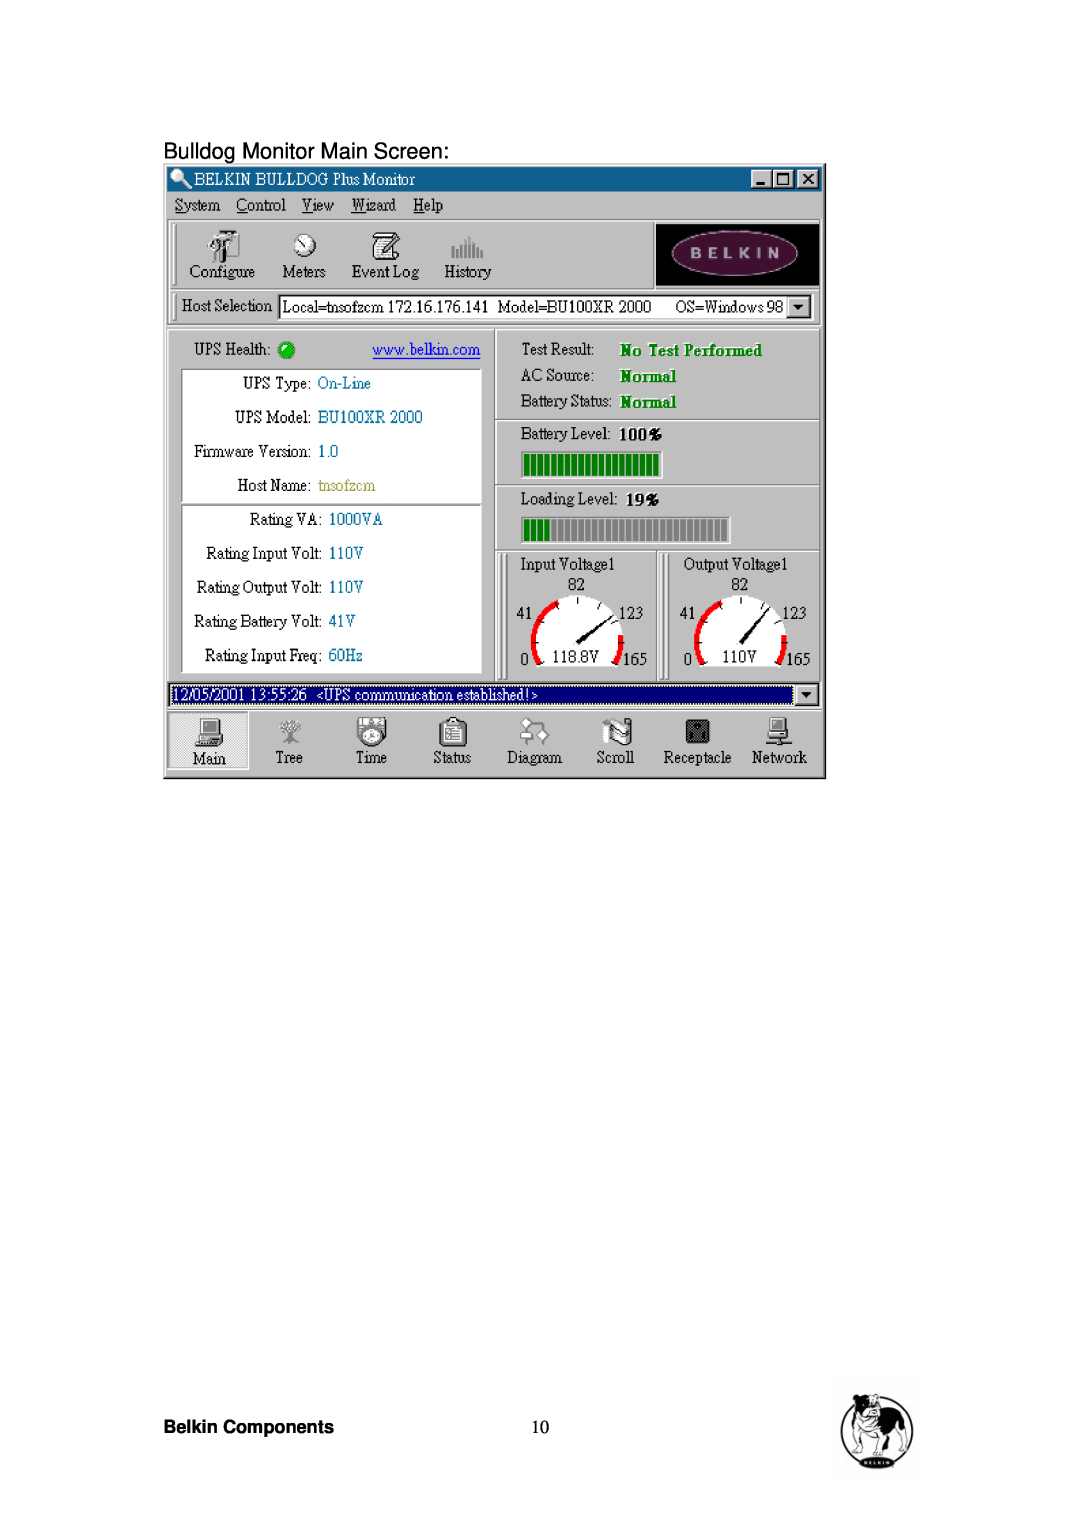 Belkin belkin bulldog plus- shutdown management software for windows Bulldog Monitor Main Screen, Belkin Components 